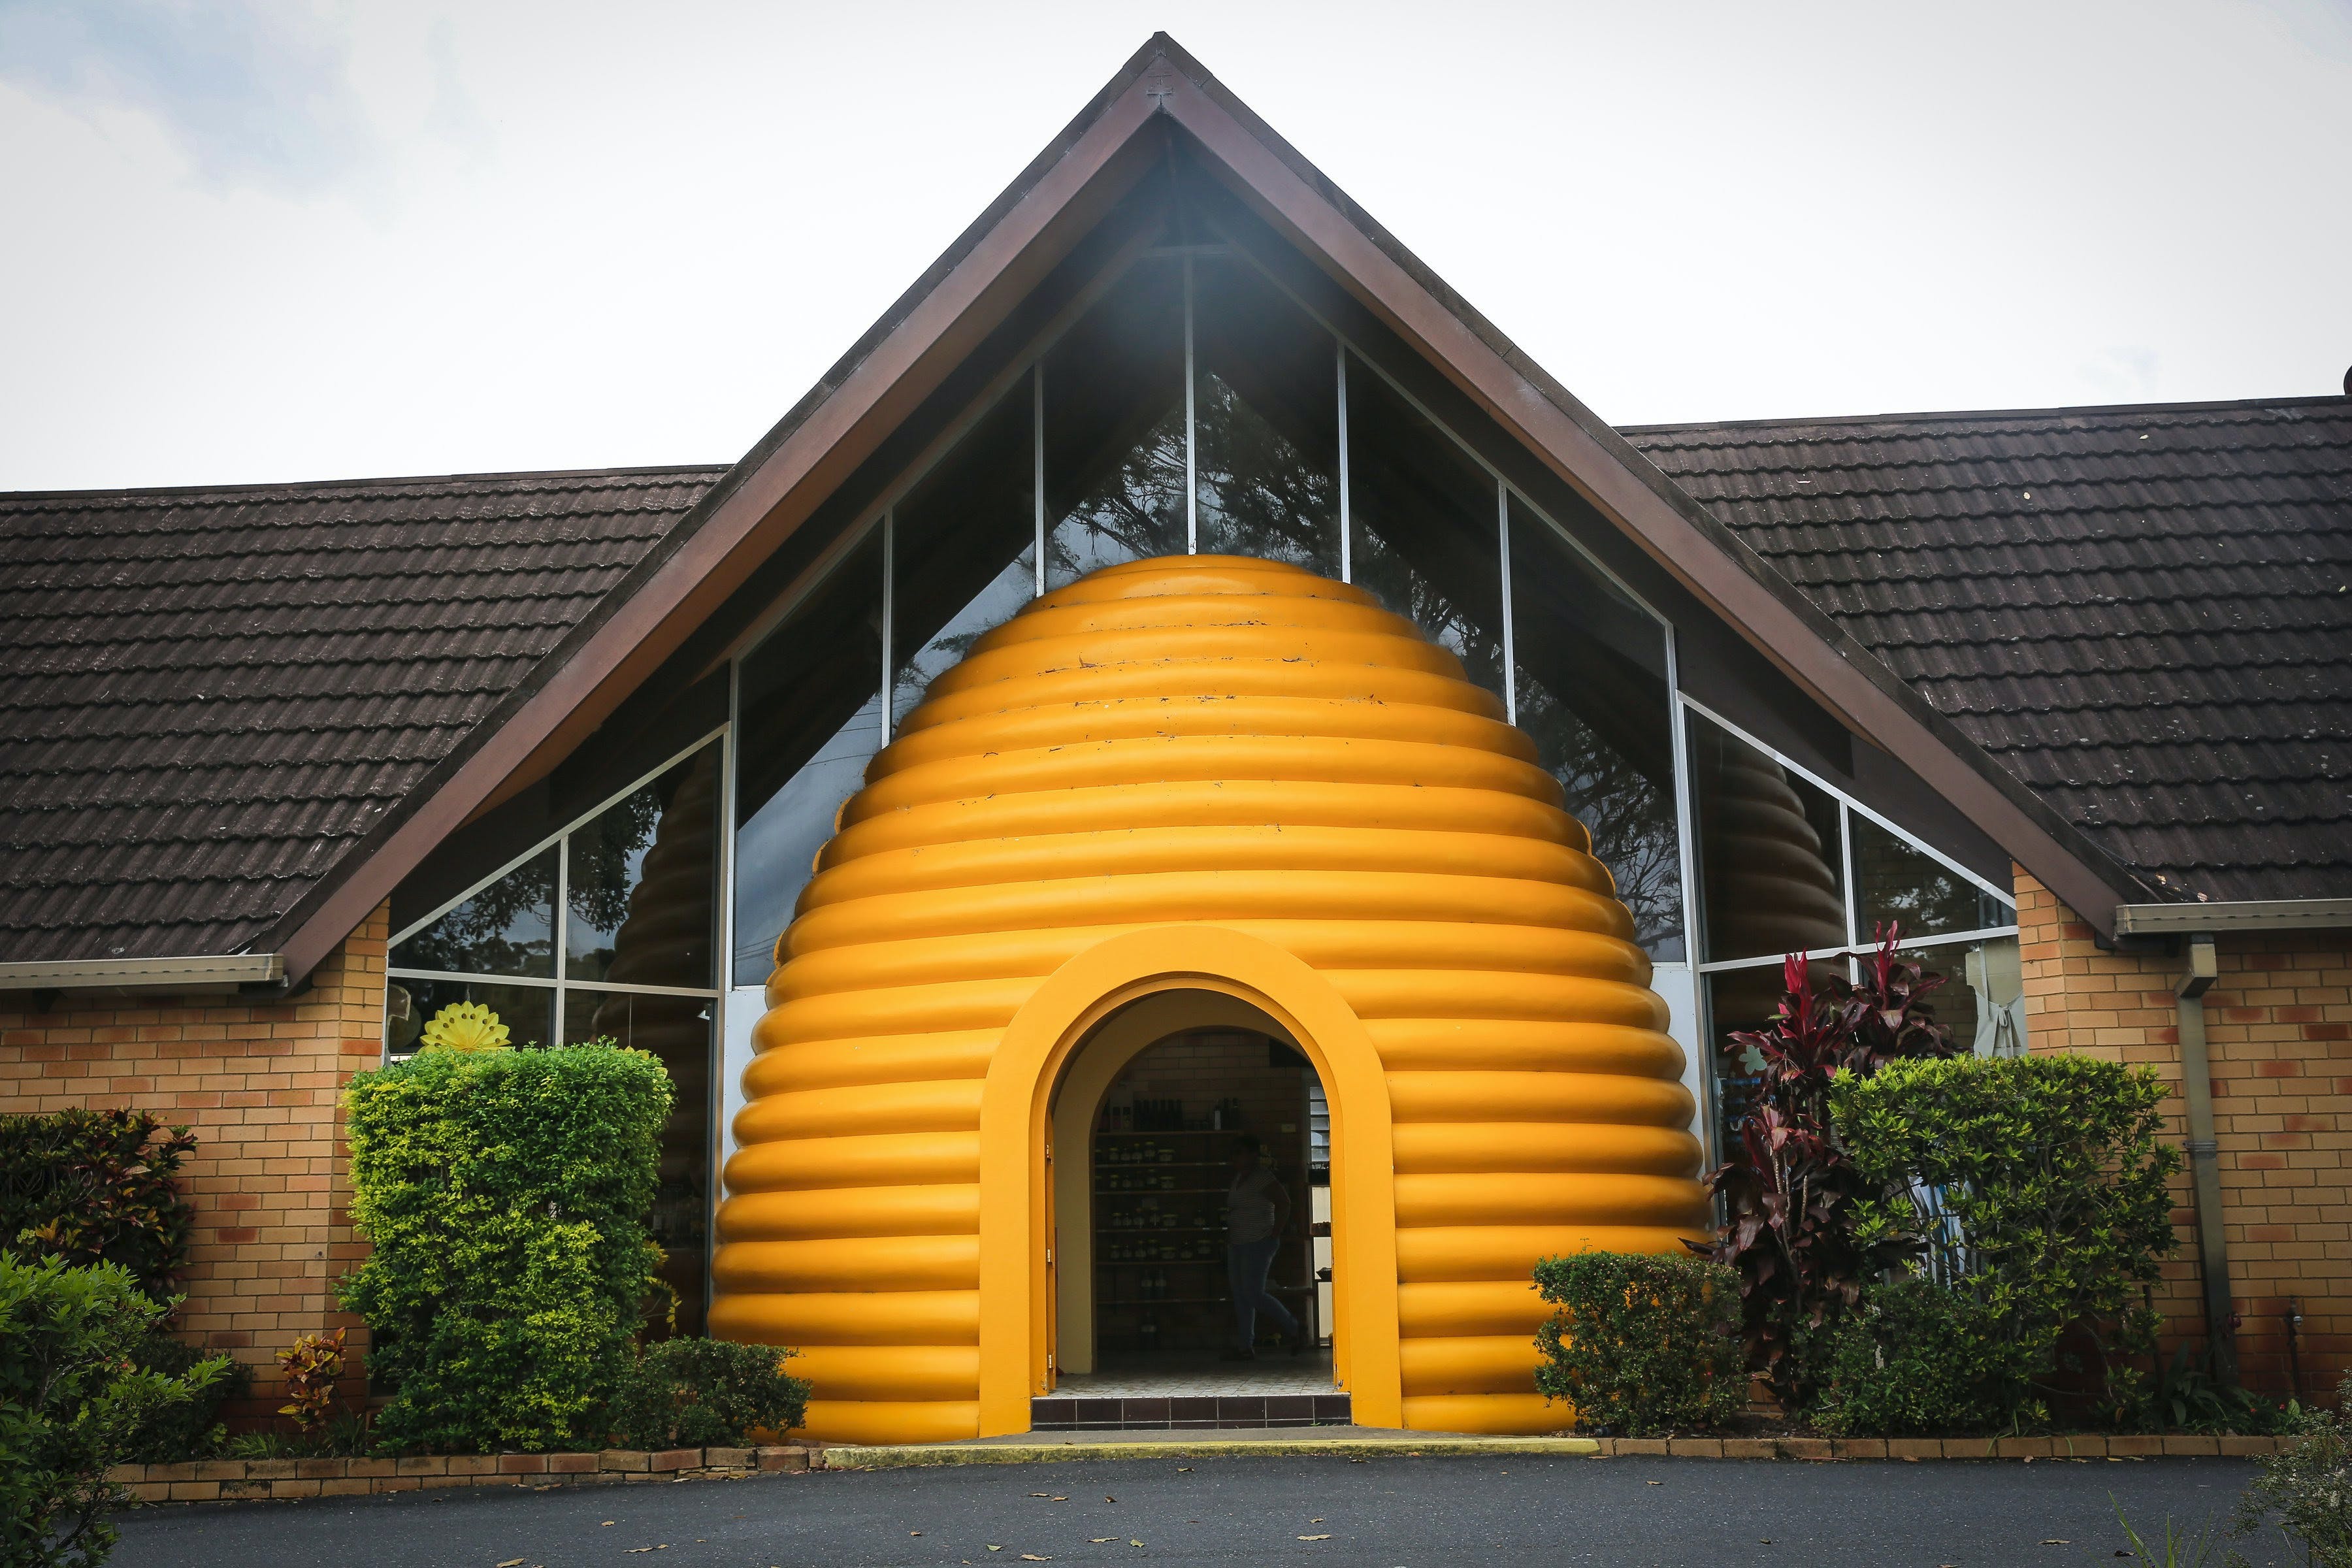 The Honey Place - Tourism Cairns